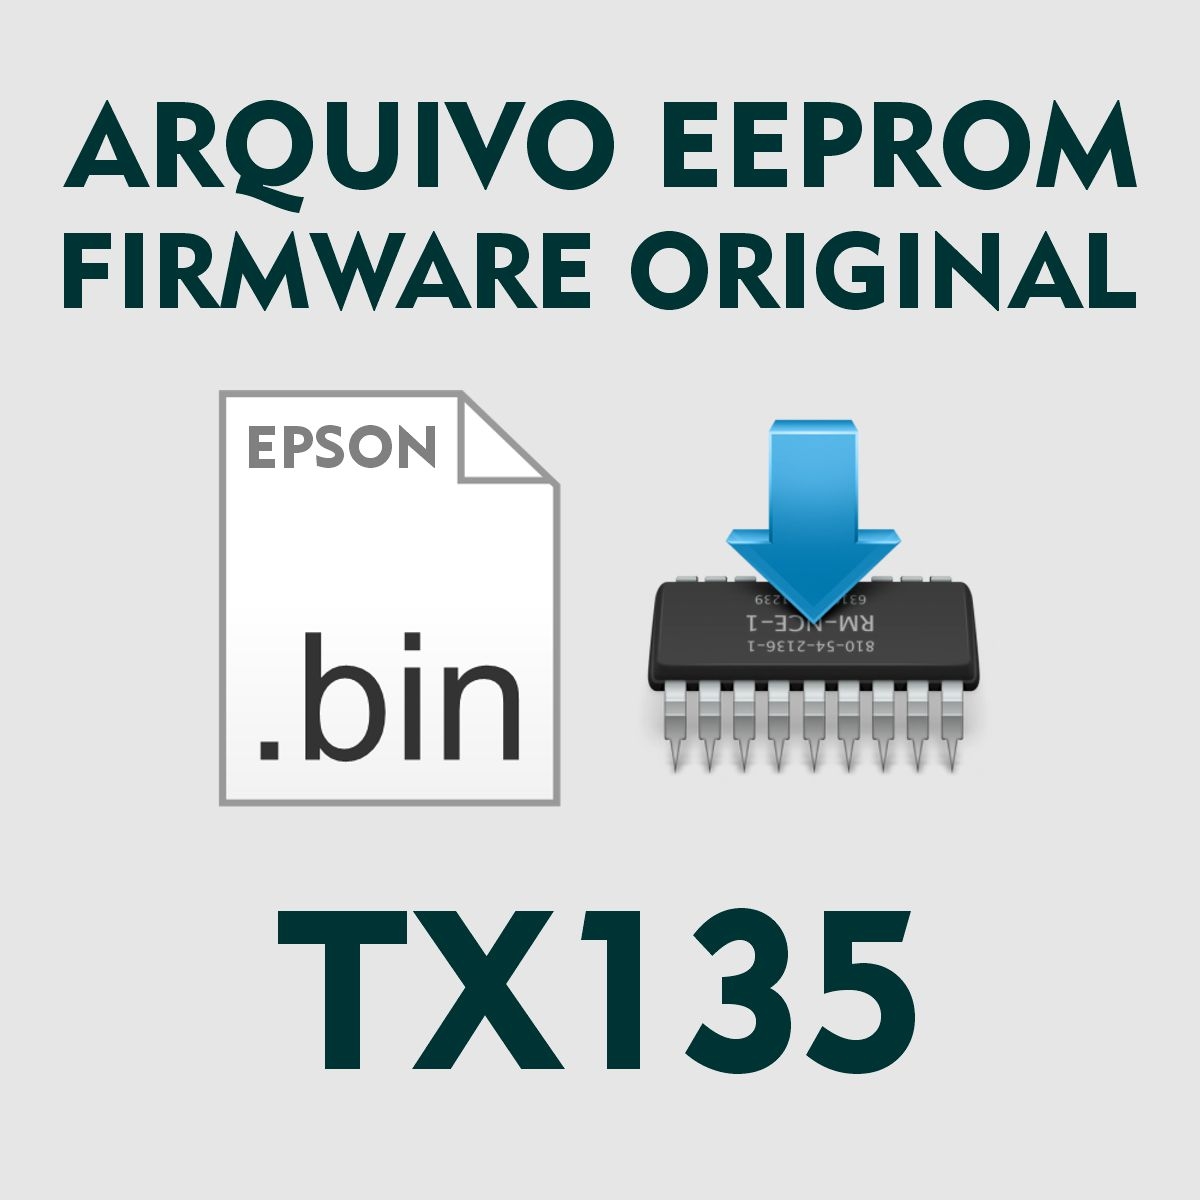 Epson TX135 | Arquivo de Eeprom Firmware .bin - Original